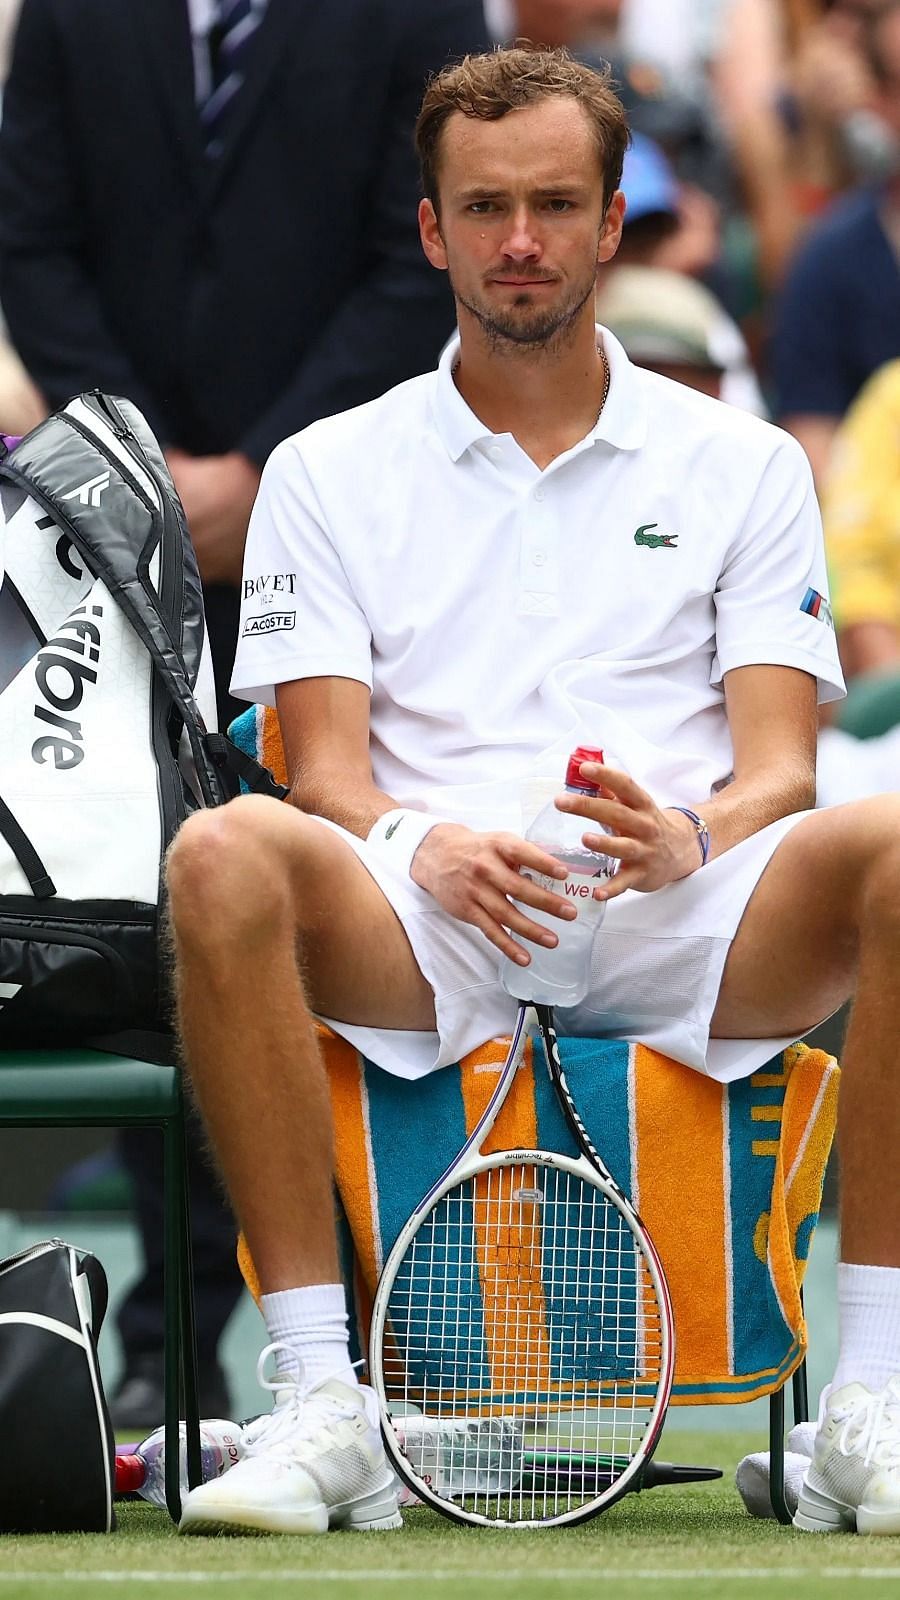 Wimbledon 2021 Daniil Medvedev vs Marin Cilic preview, head-to-head and prediction